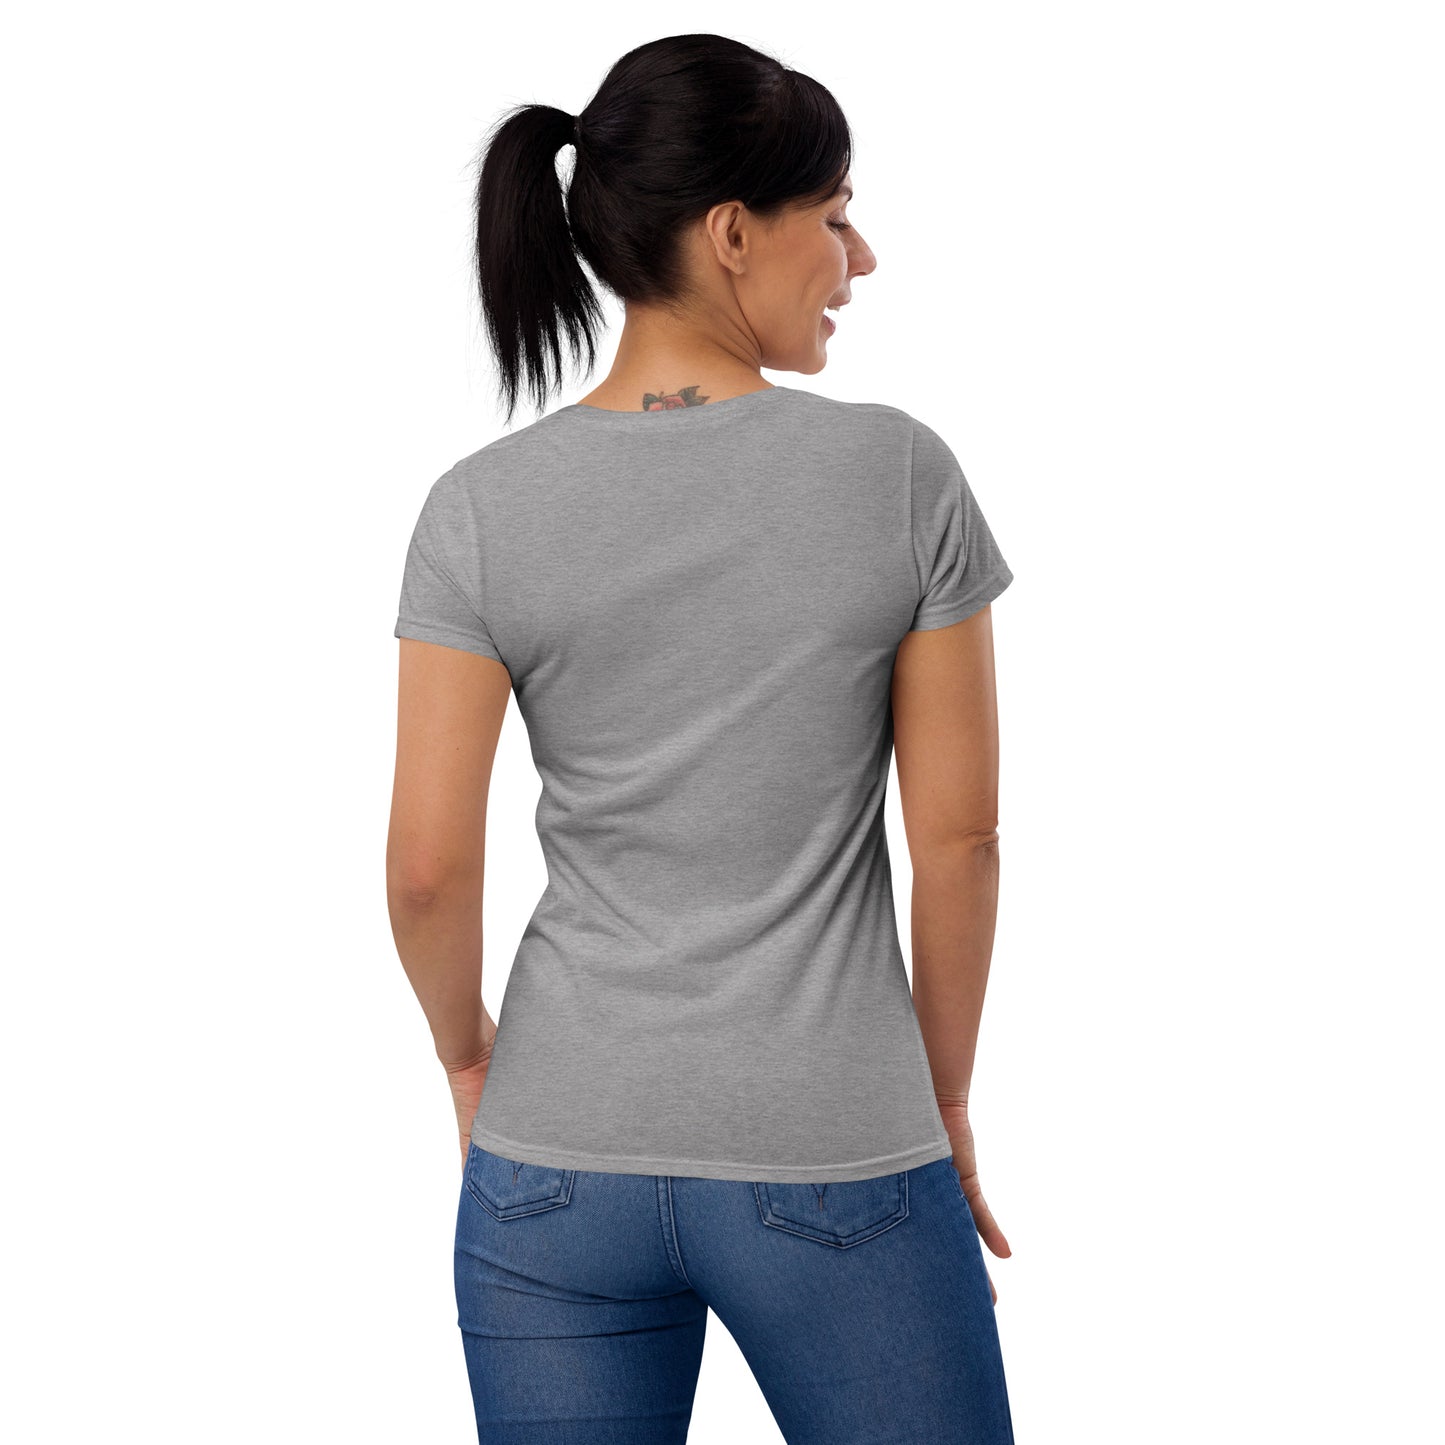 Dark Leaf Women's Short Sleeve T-shirt